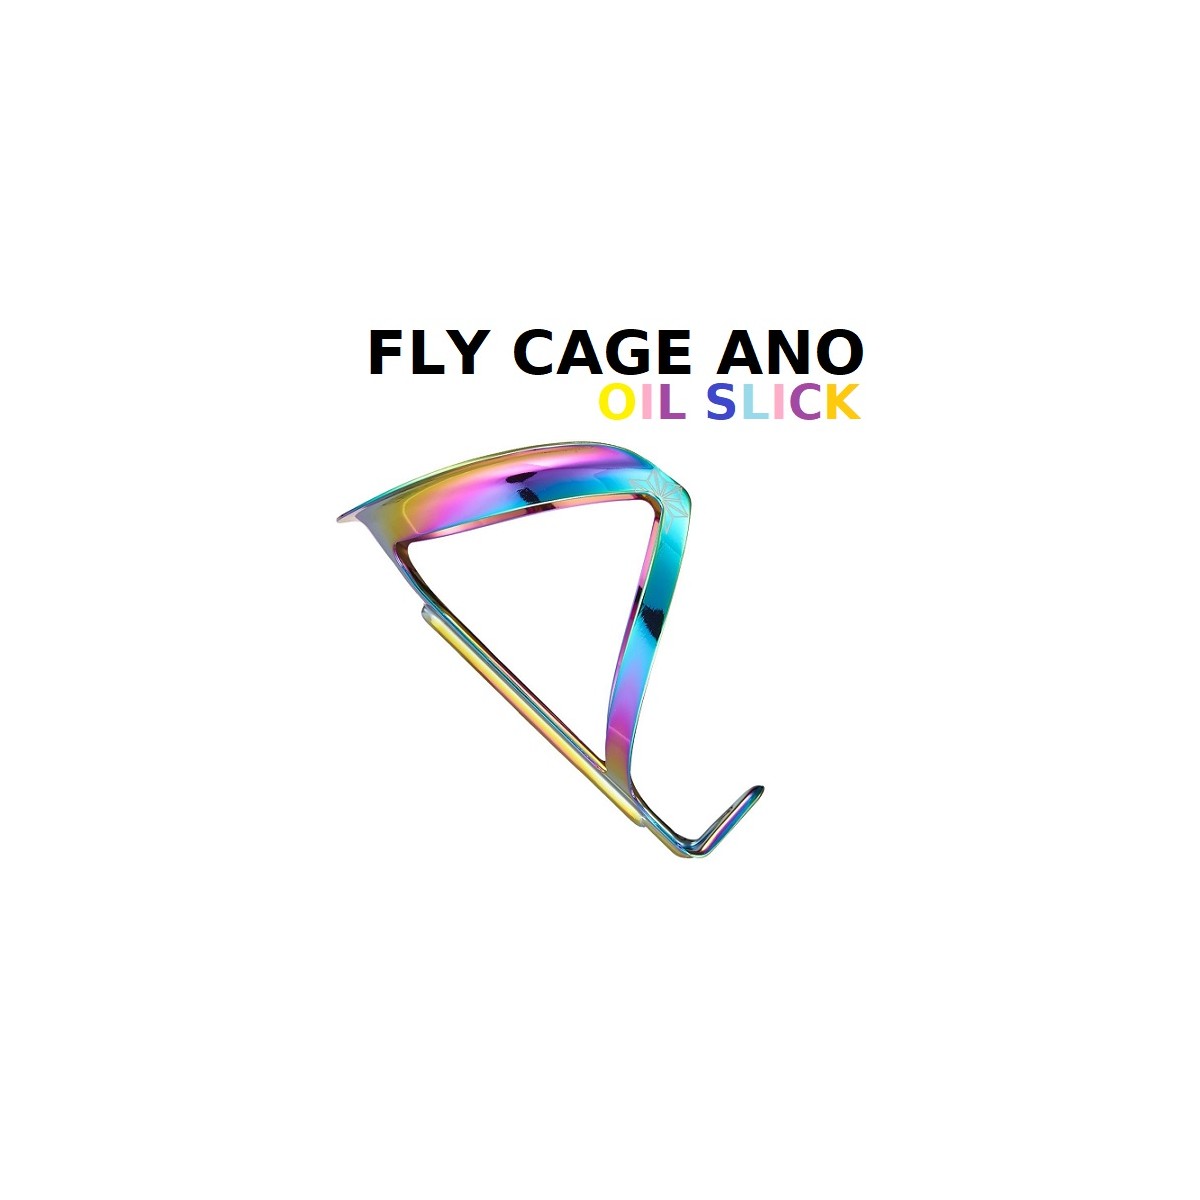 PORTE BIDON - Fly cage ano - Oil Slick - SZC-FLYCAGE-ANO